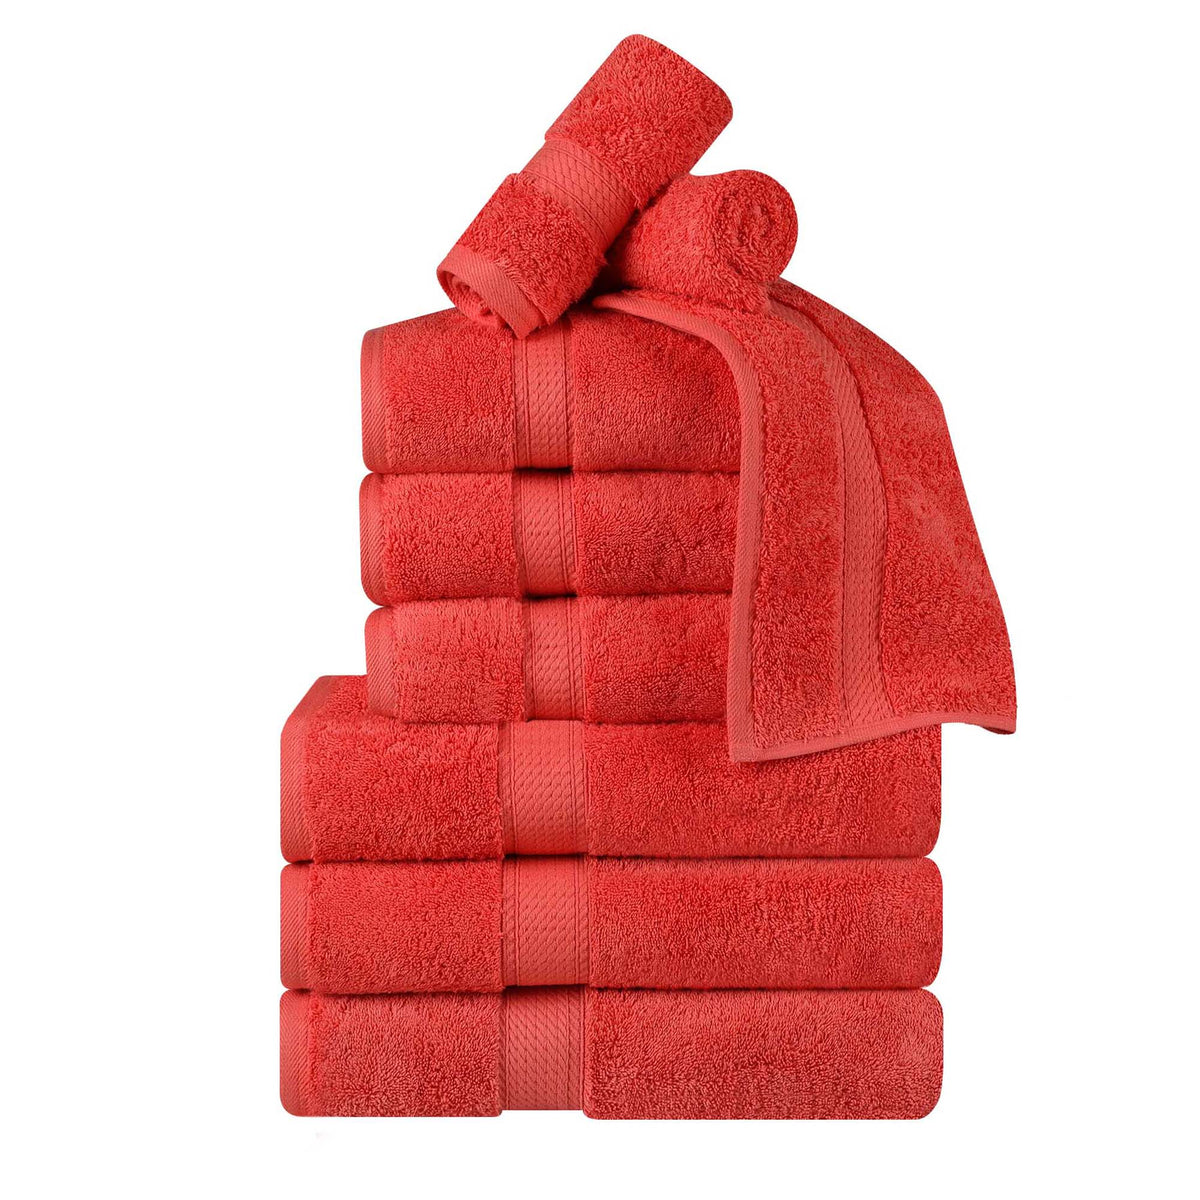 Superior Egyptian Cotton Plush Heavyweight Absorbent Luxury Soft 9-Piece Towel Set